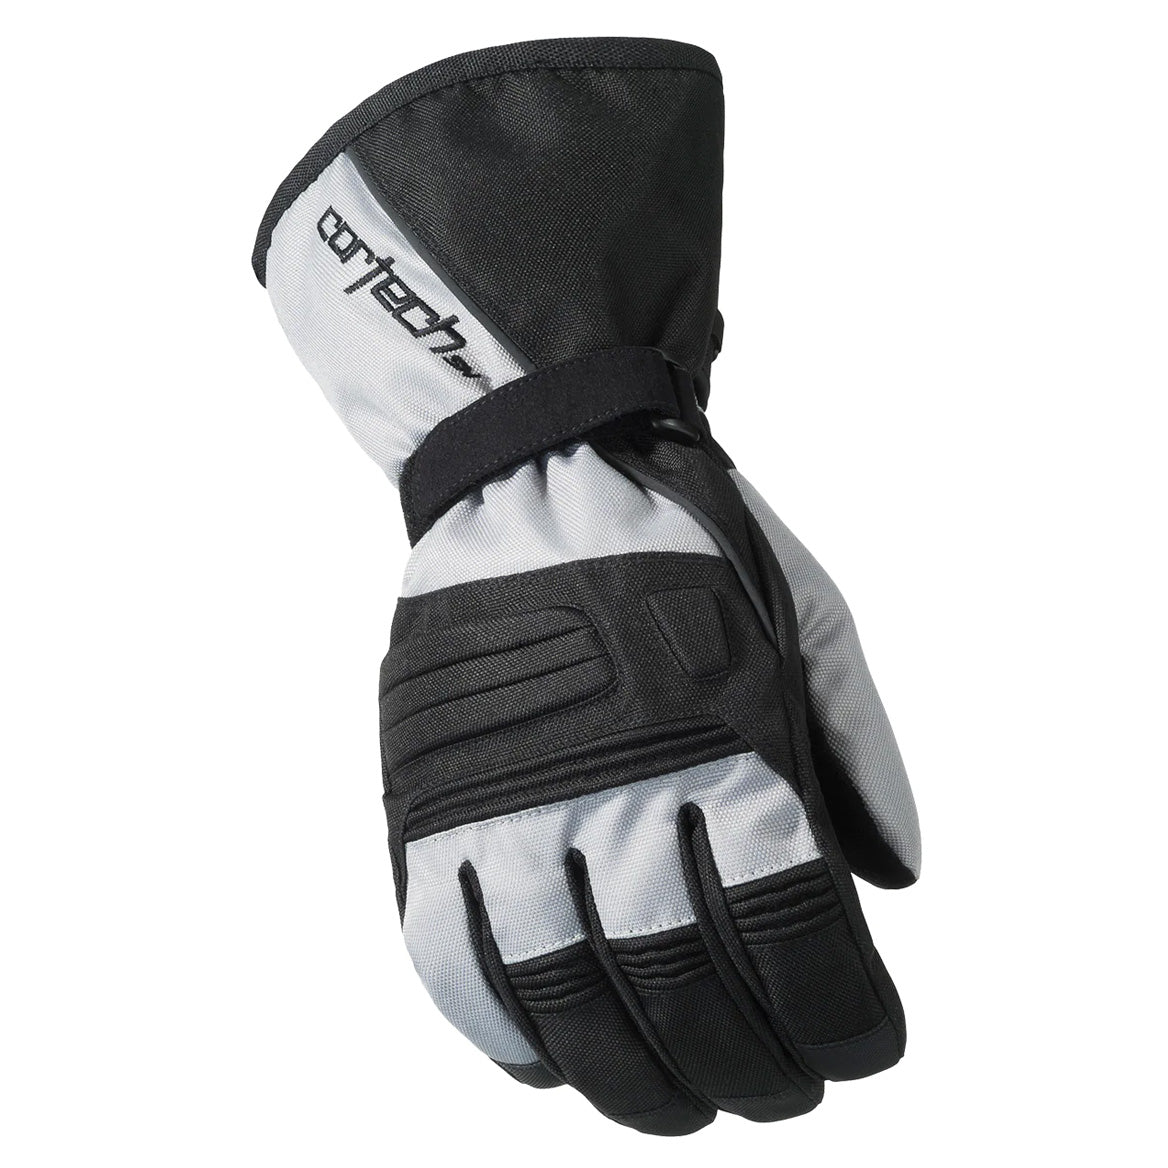 
Cortech Journey 2.0 Men's Snow Gloves 